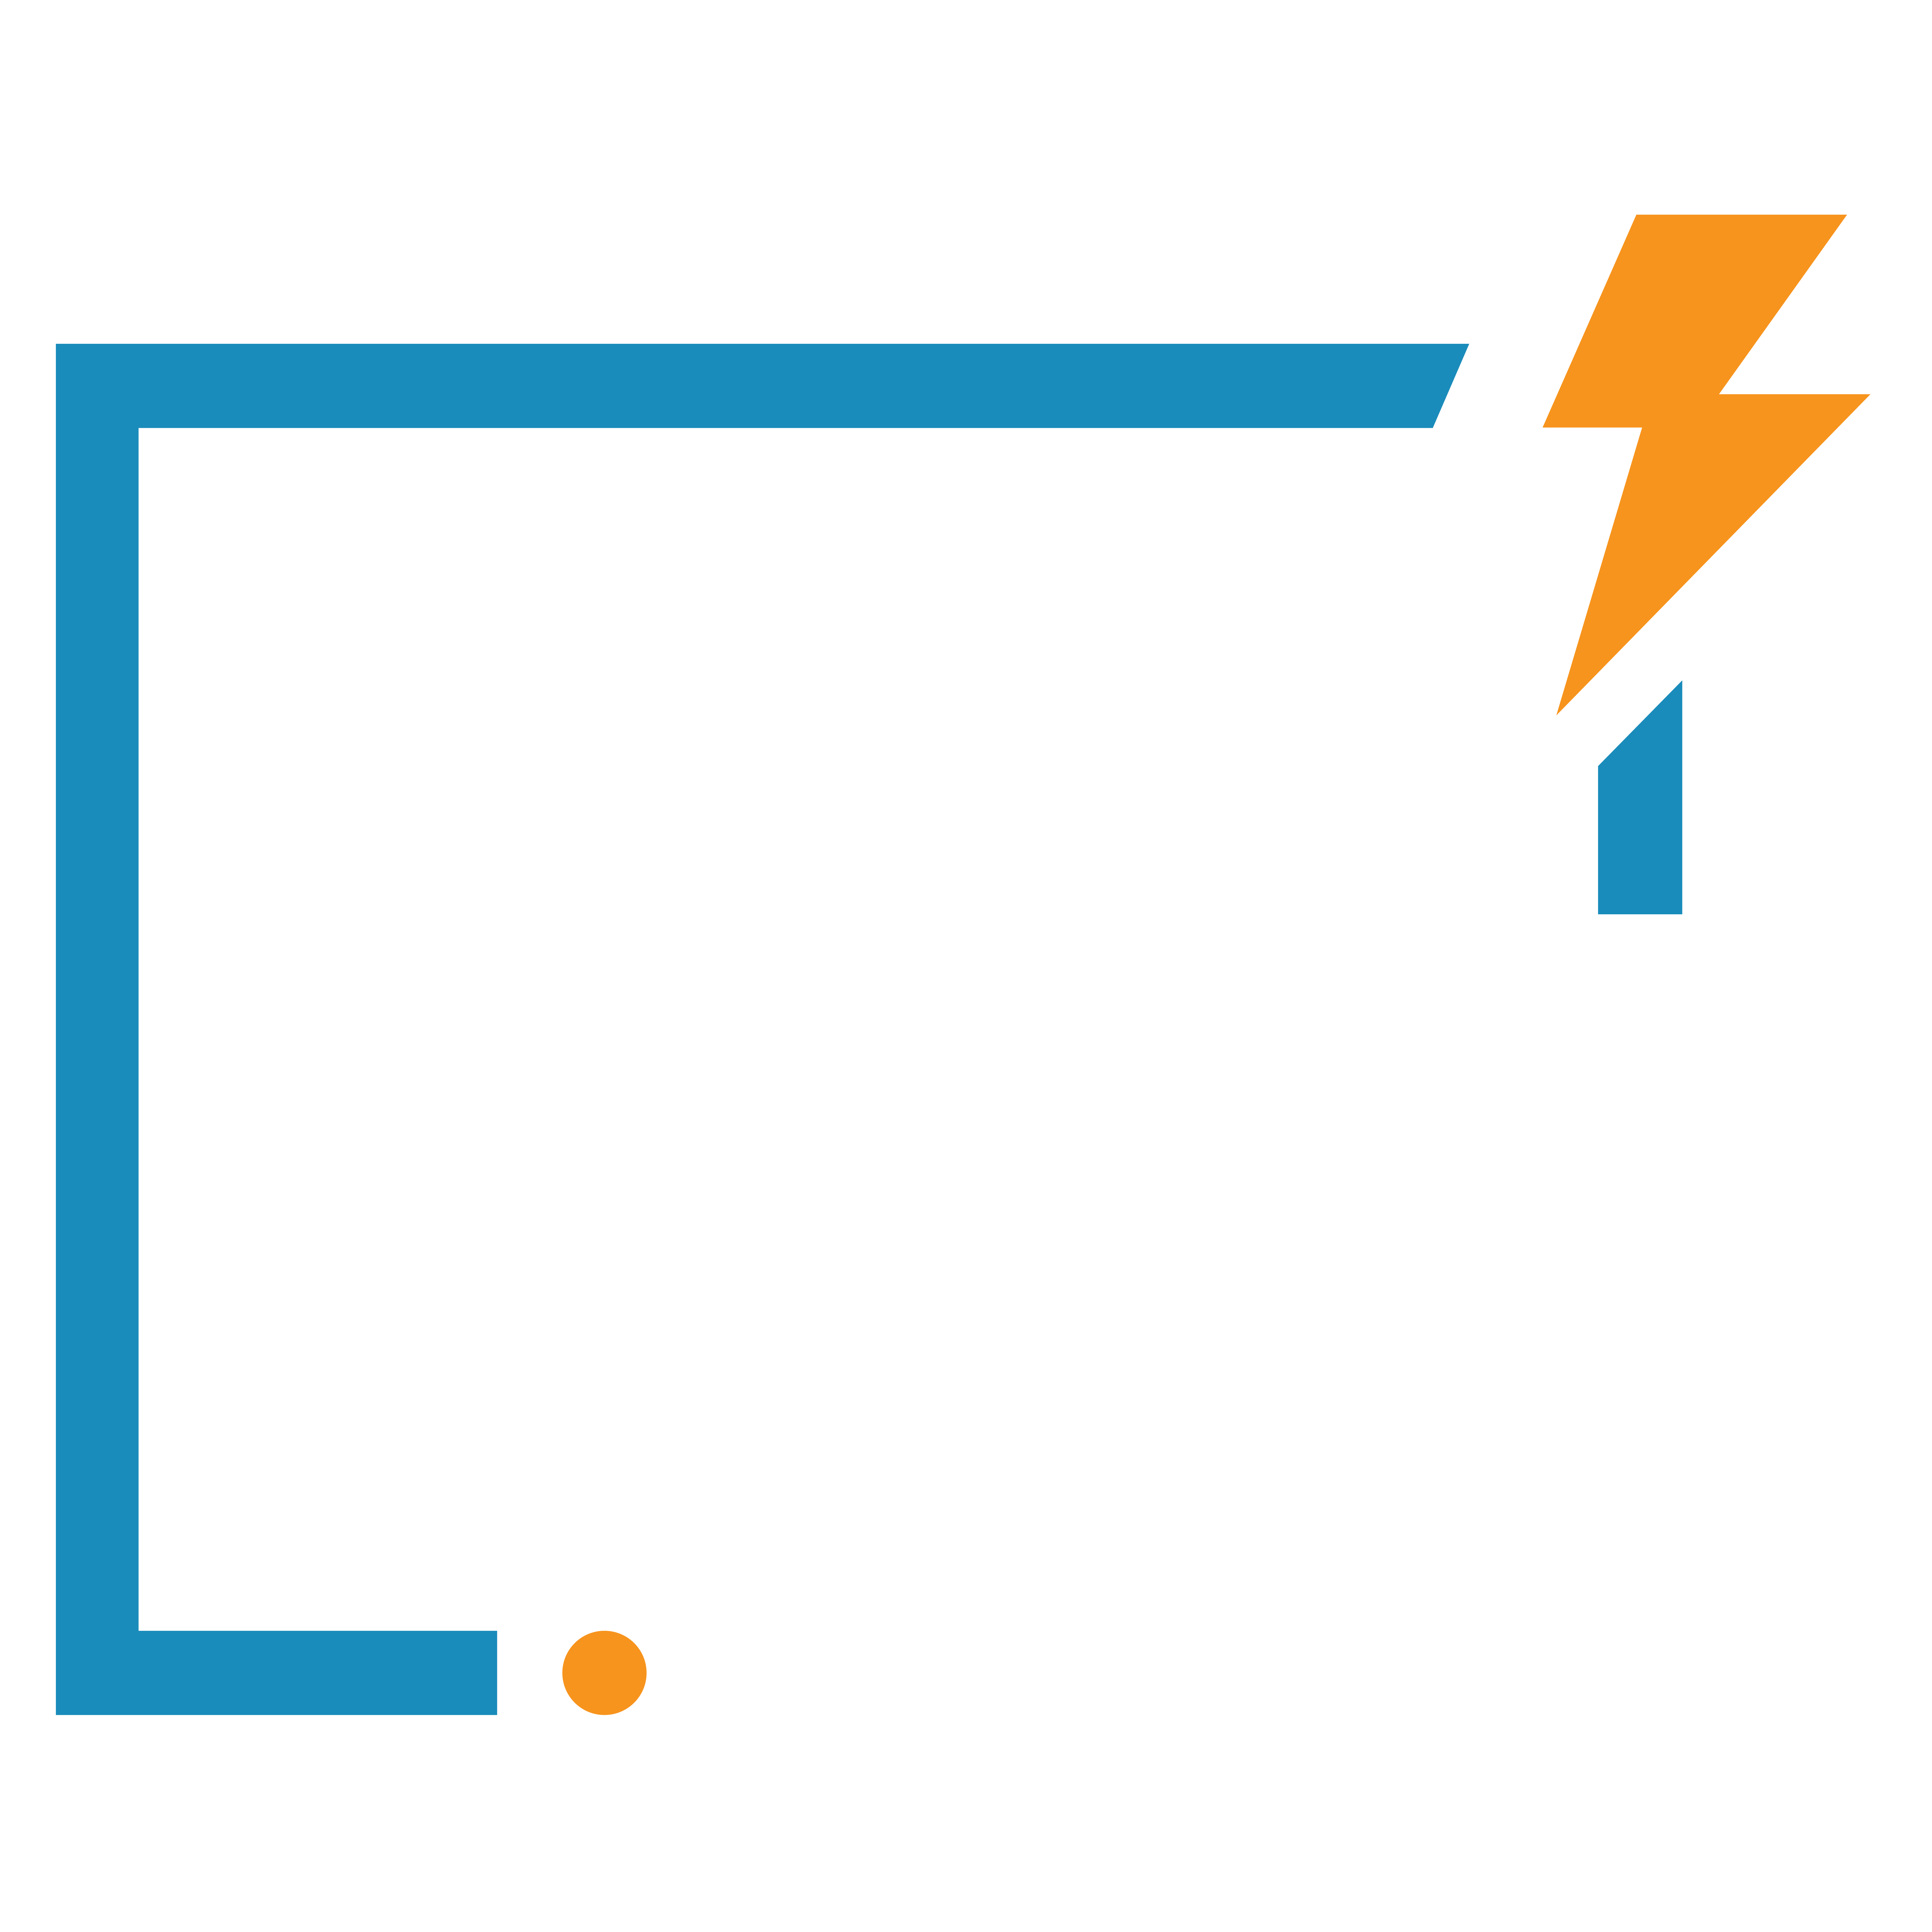 Legal Weed Logo